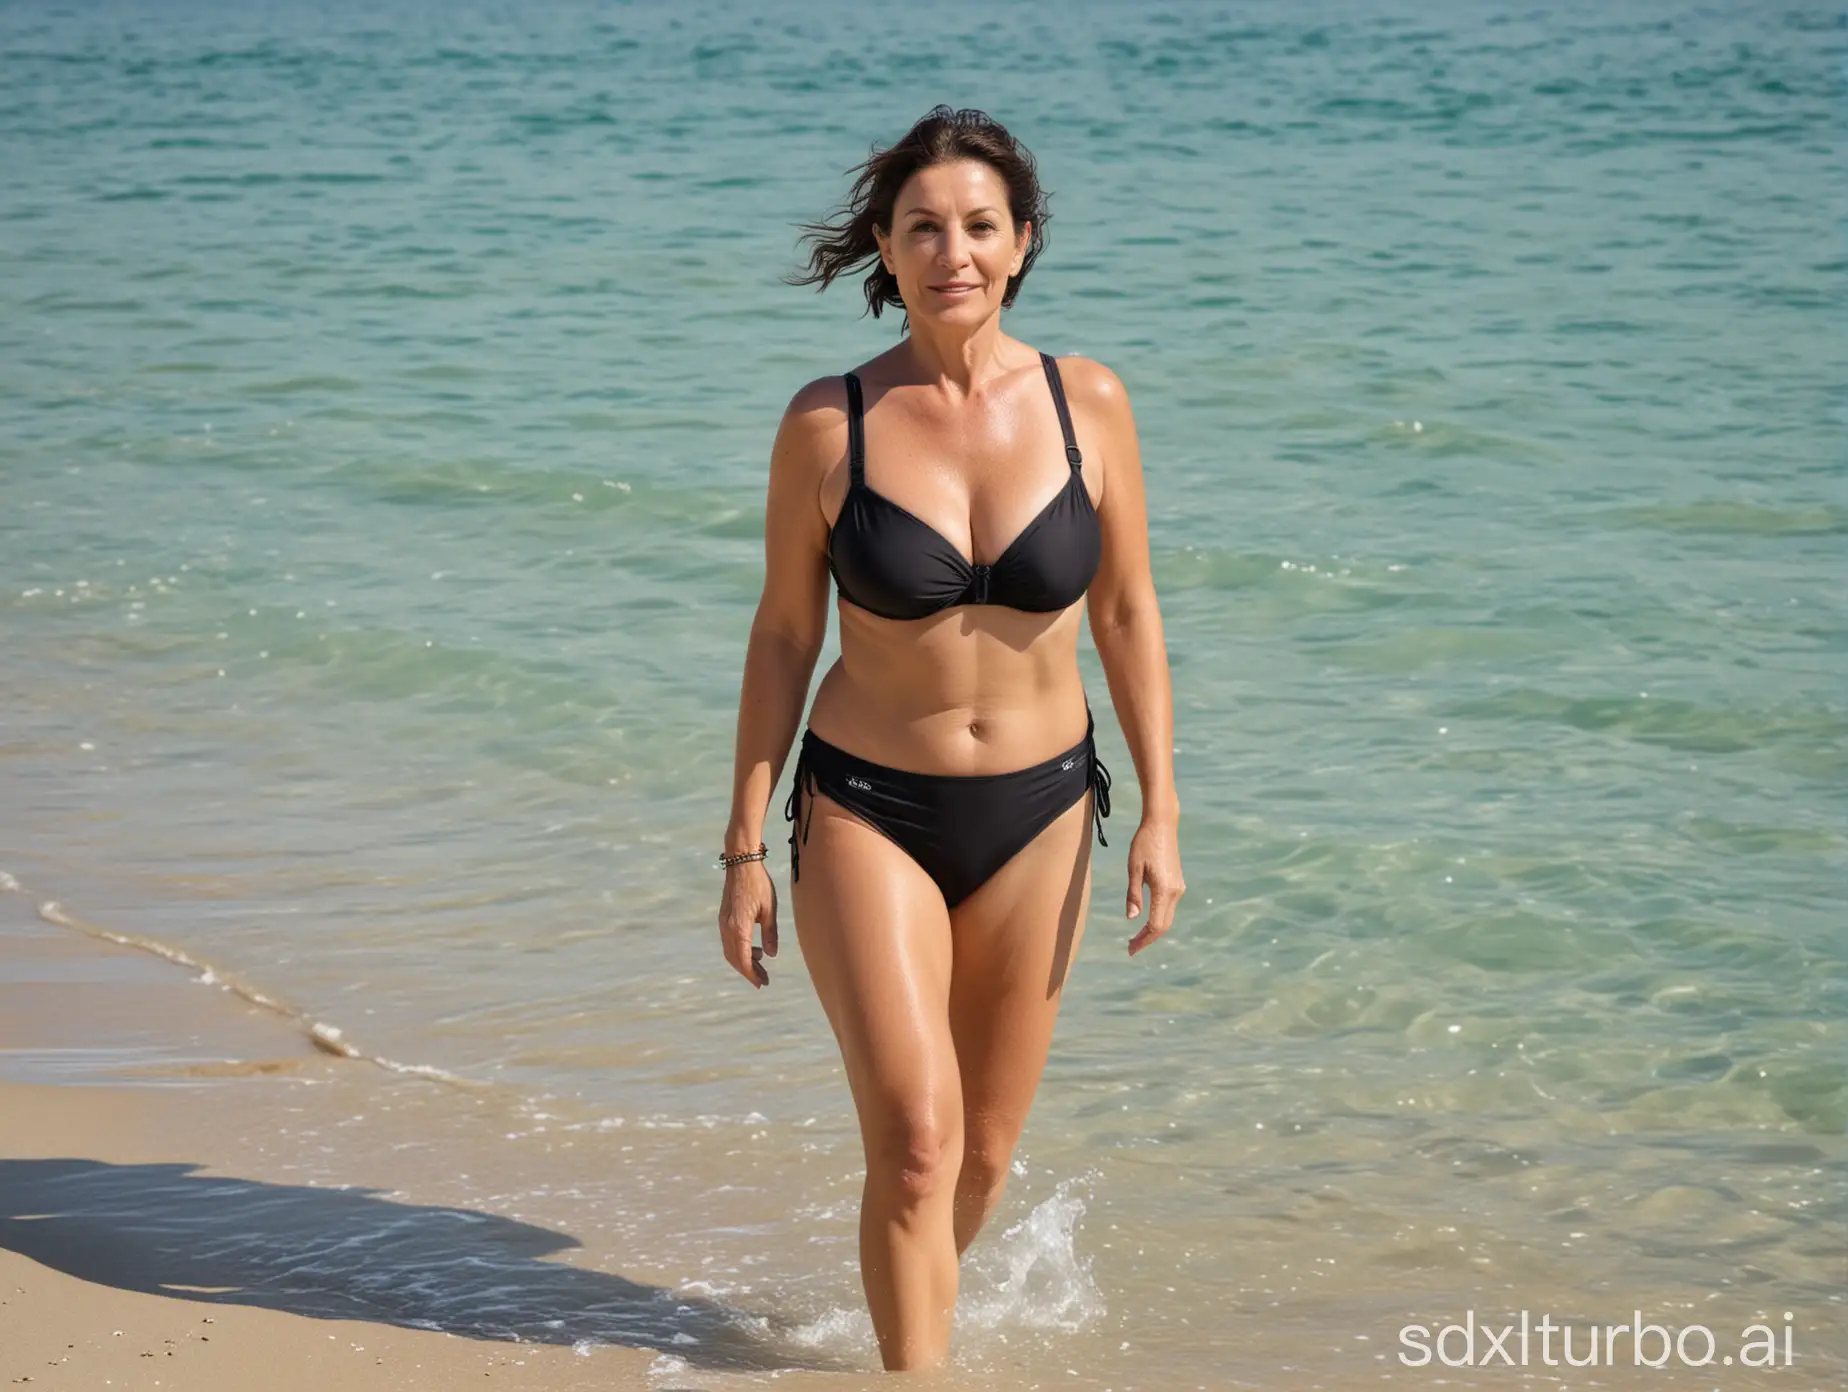 Mature italiana woman age 55 no fat bra 10 , swimming suit walk on italia beach